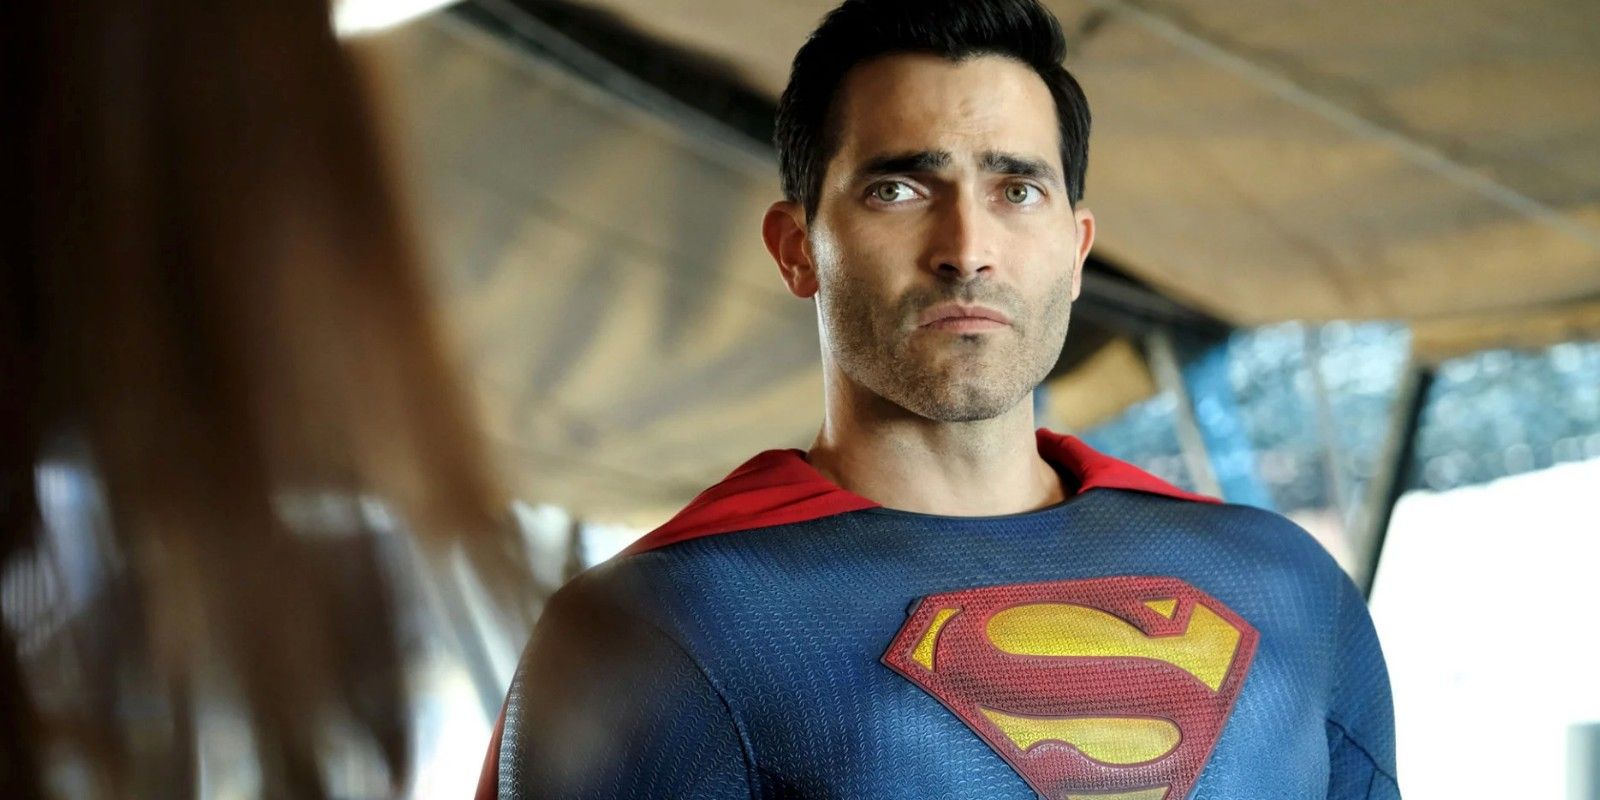 Superman And Lois Season 2 Episode 13 Trailer Teases An Intense Finale Trending News